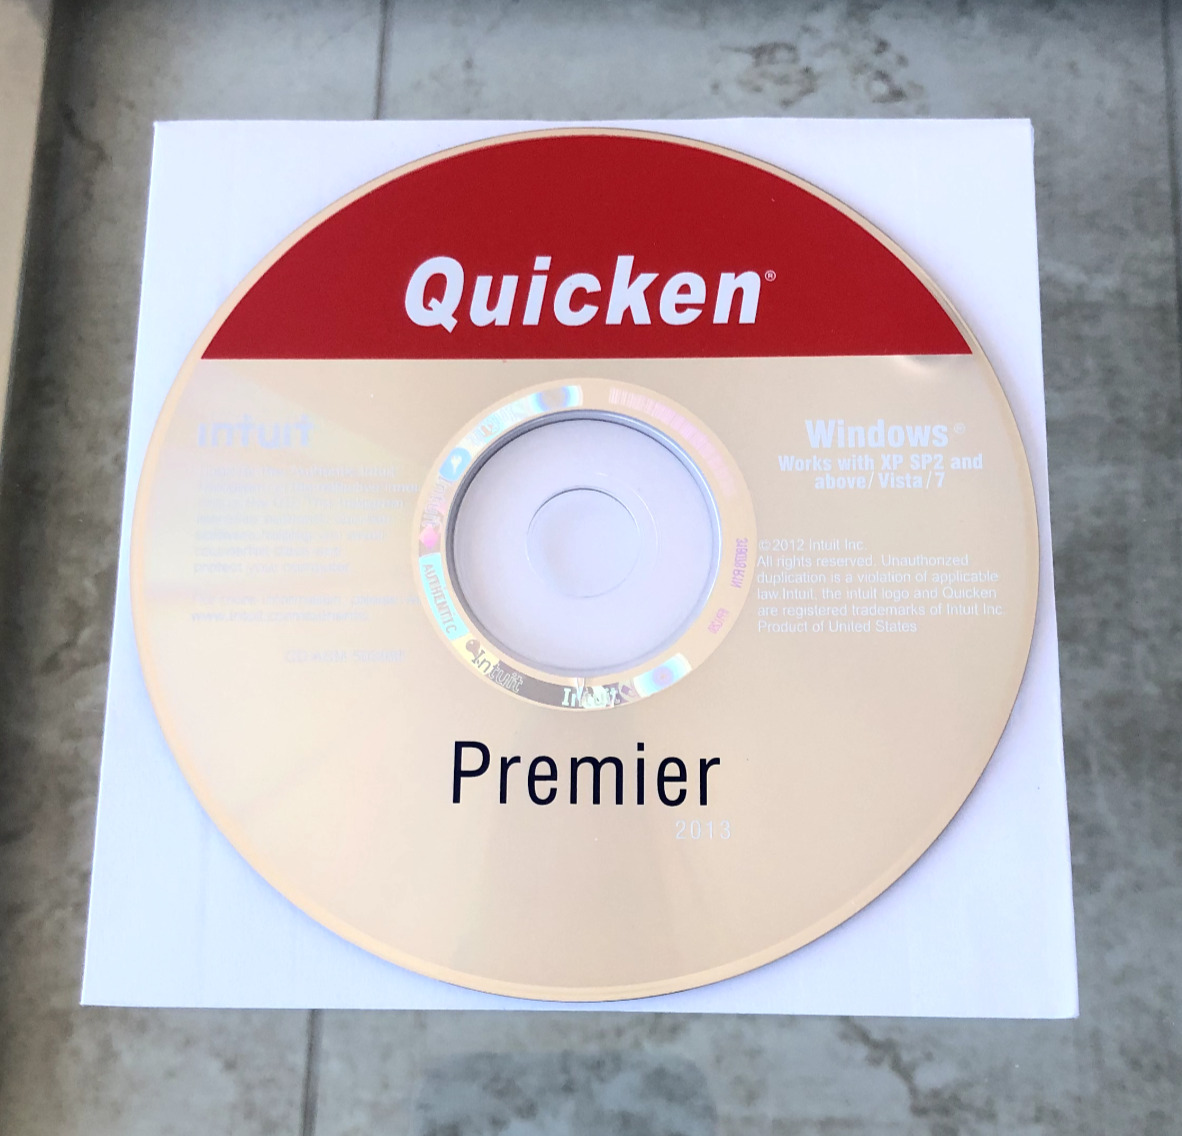 Intuit Quicken Premier 2013 For Windows XP/SP2 & Above/Vista/7